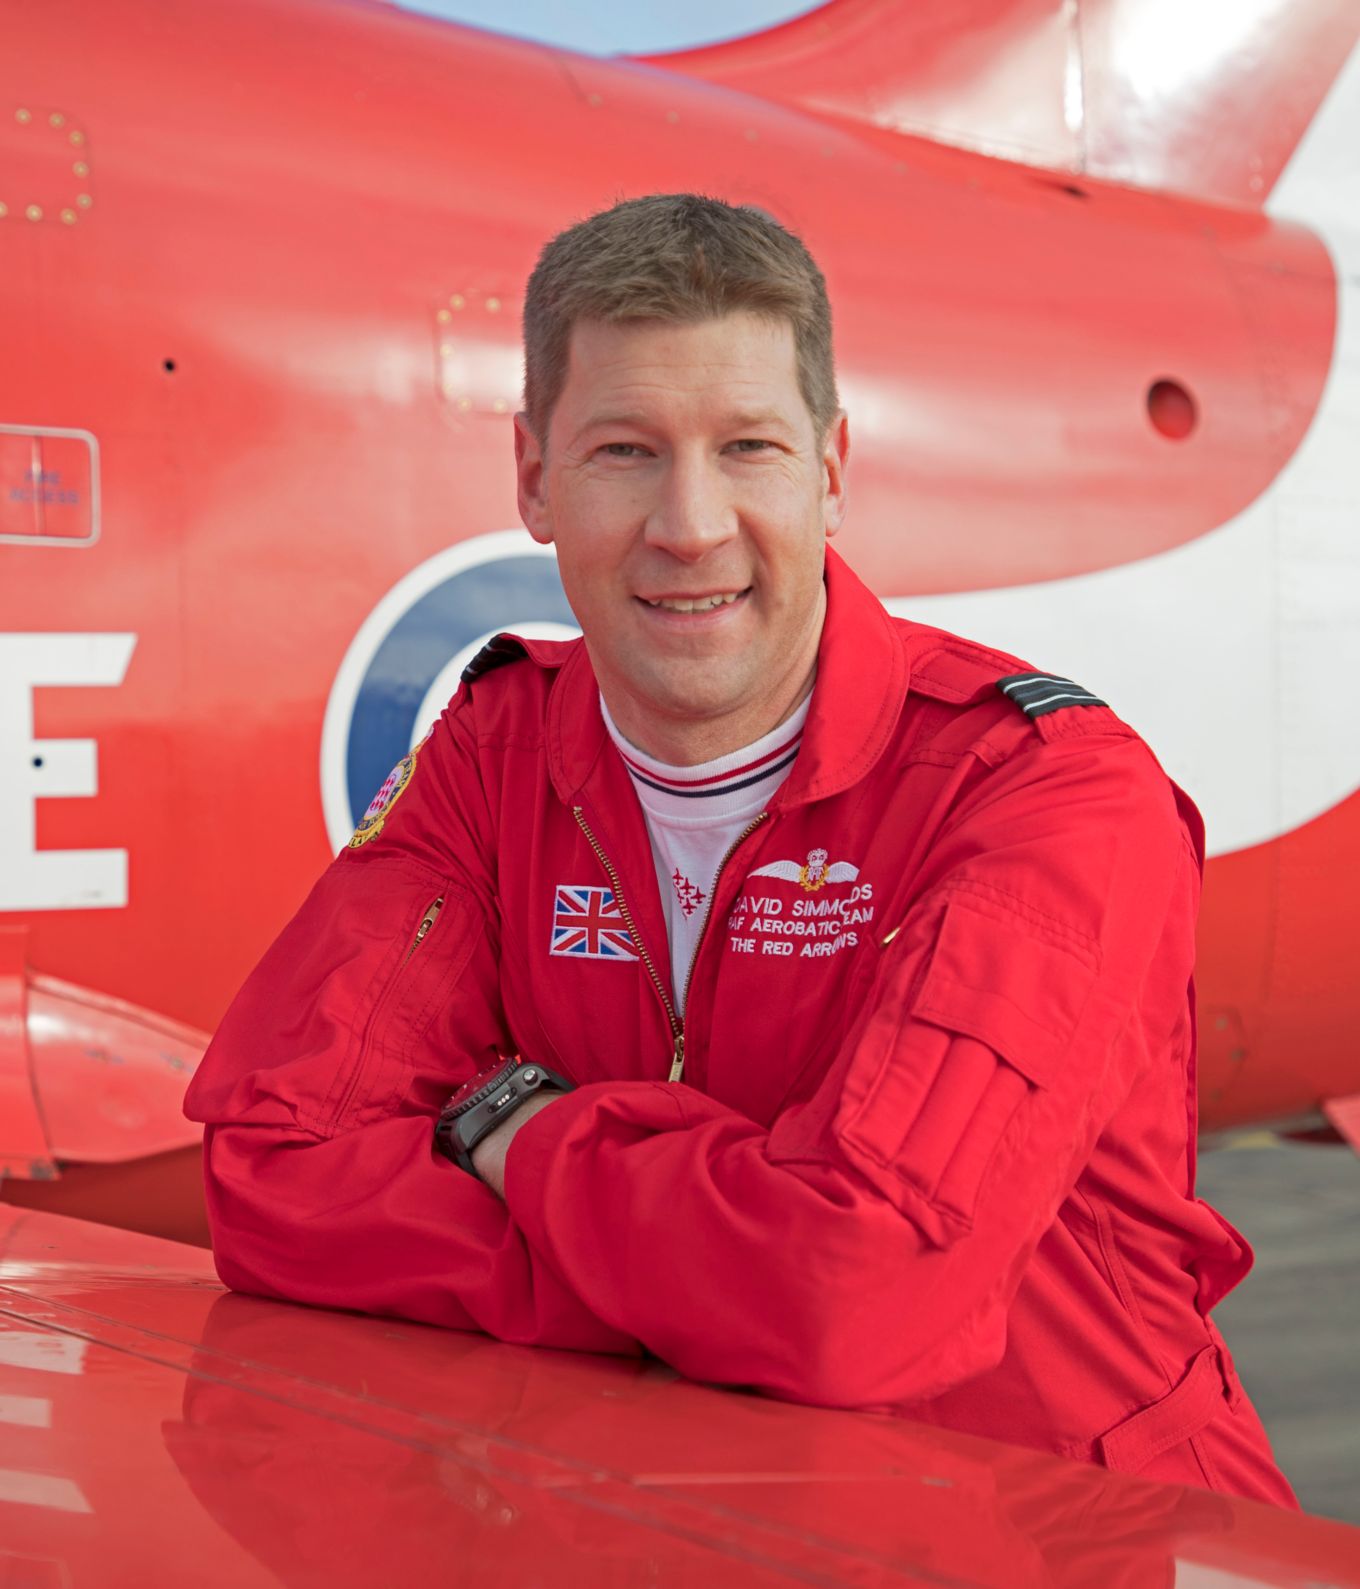 Red 5 in 2020 will be Flight Lieutenant David Simmonds.